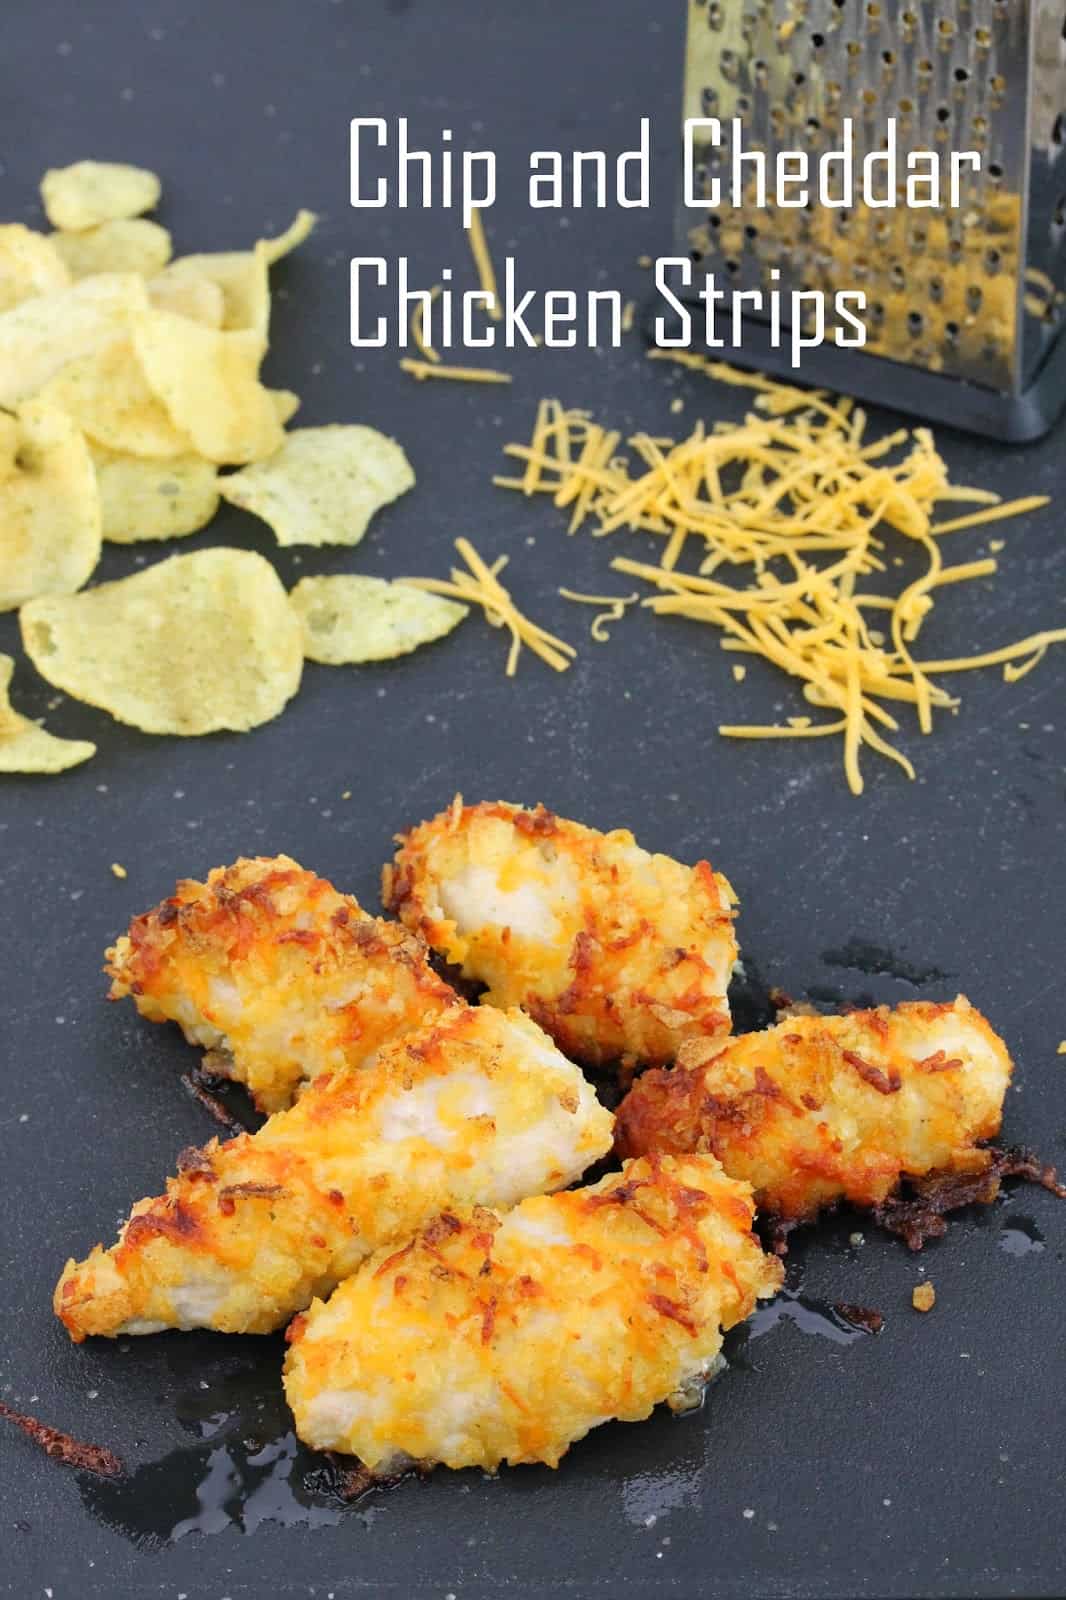 Chip and Cheddar Chicken Strips